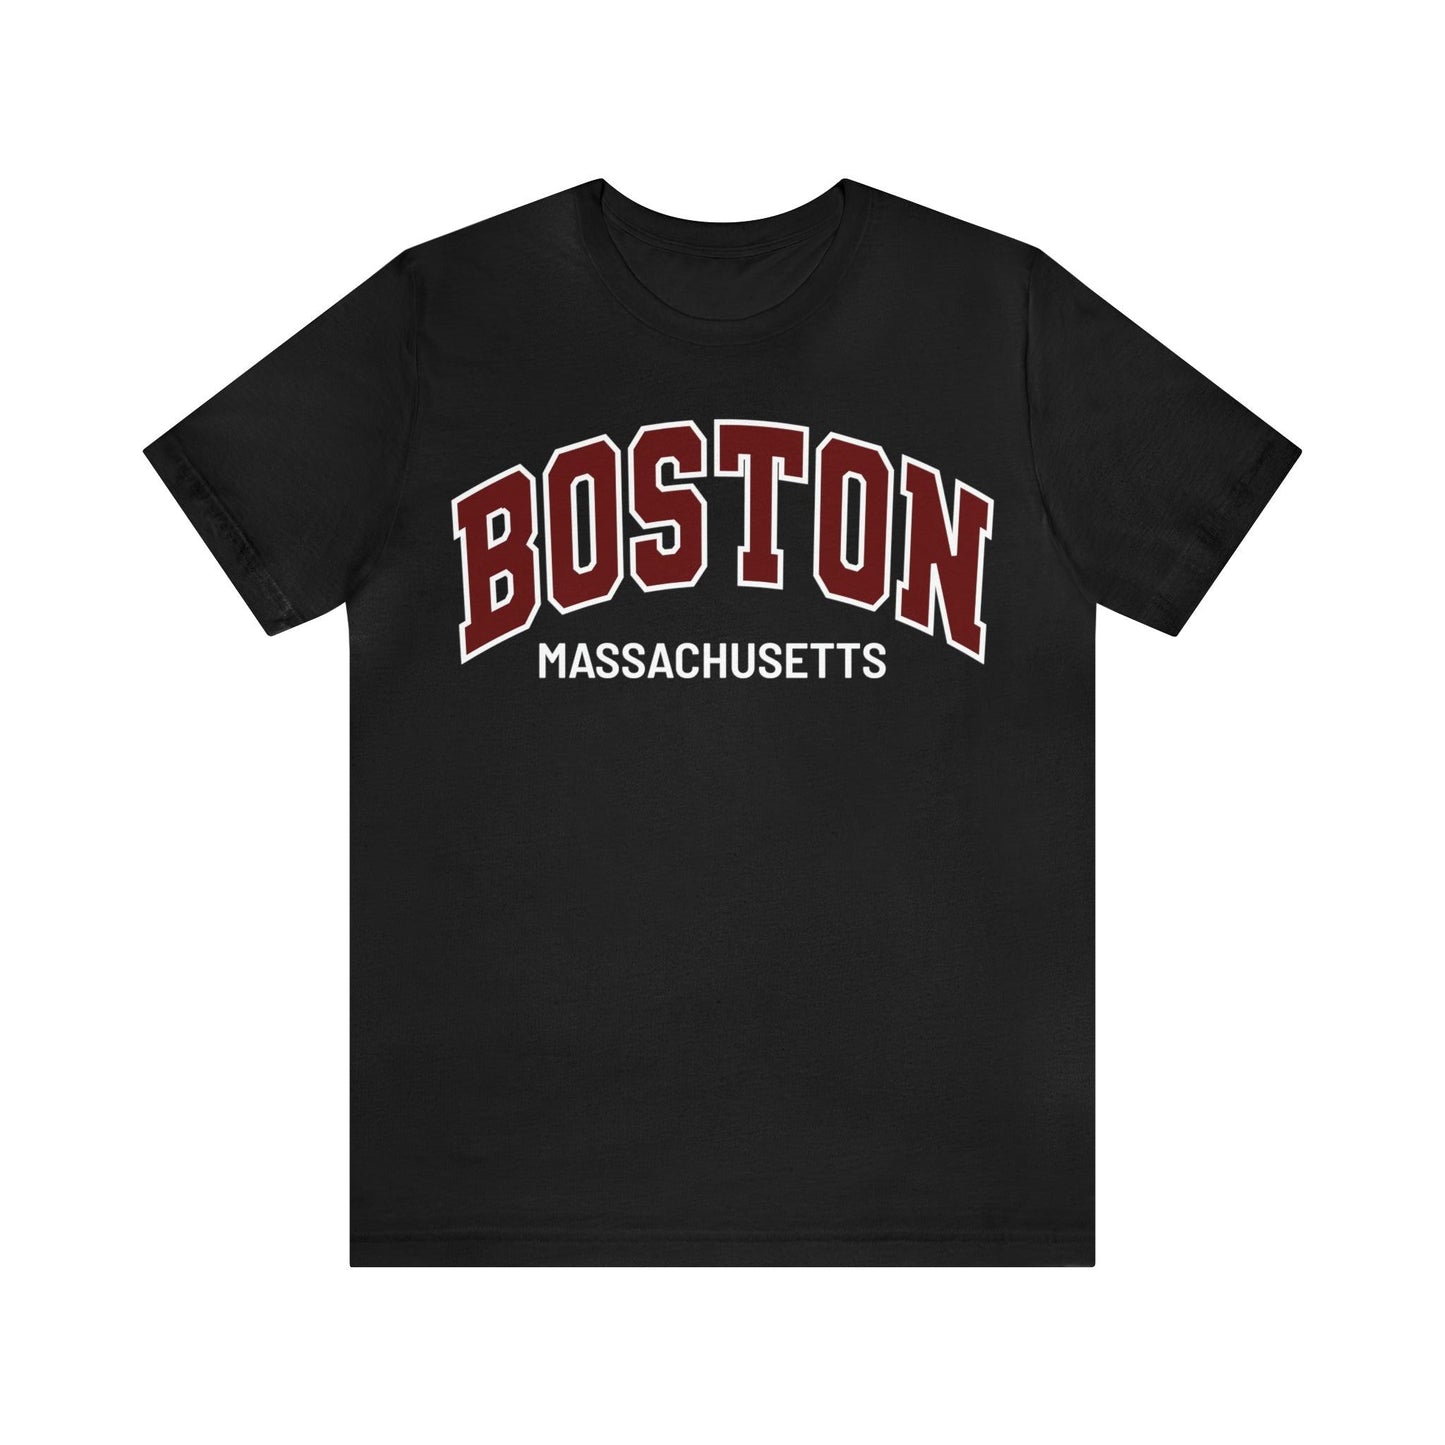 Boston Tshirt, Vintage Graphic Tee - Get the best Boston Souvenir with this iconic Boston graphic Tee